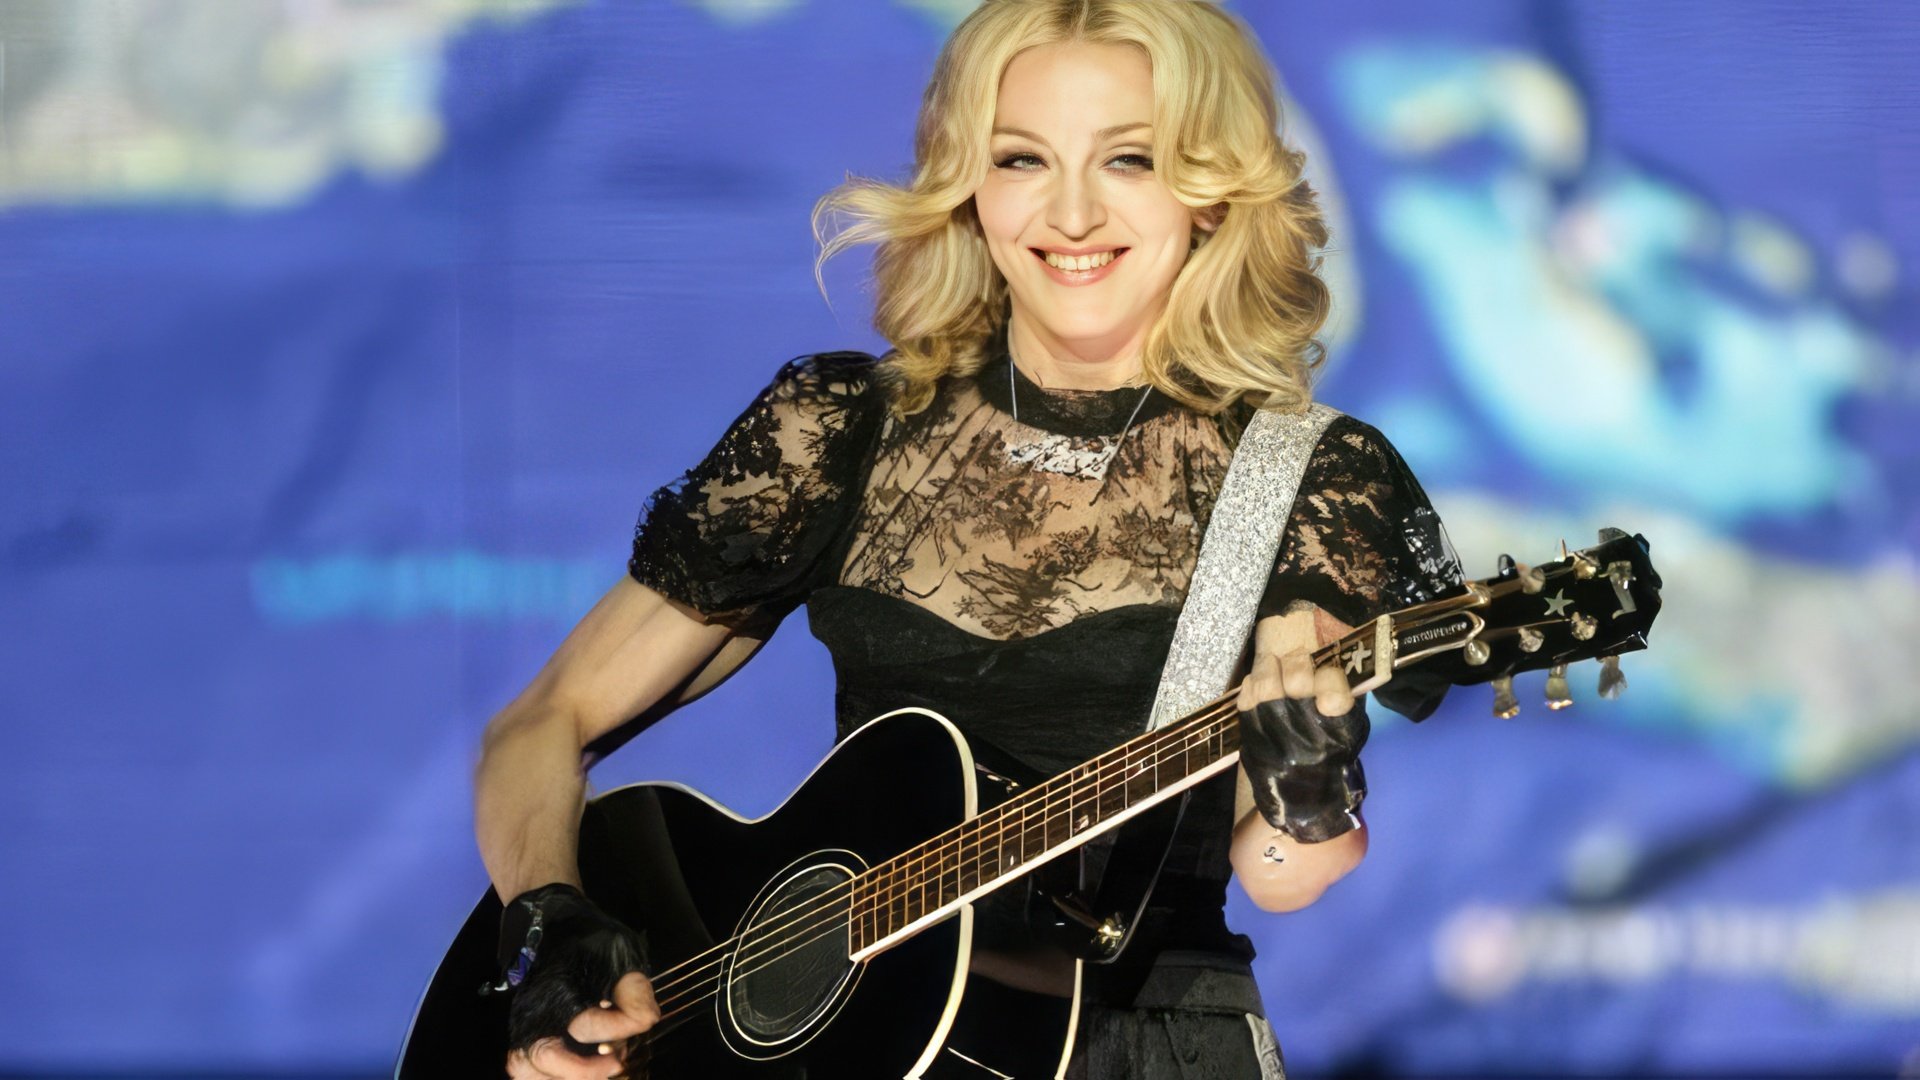 American singer Madonna